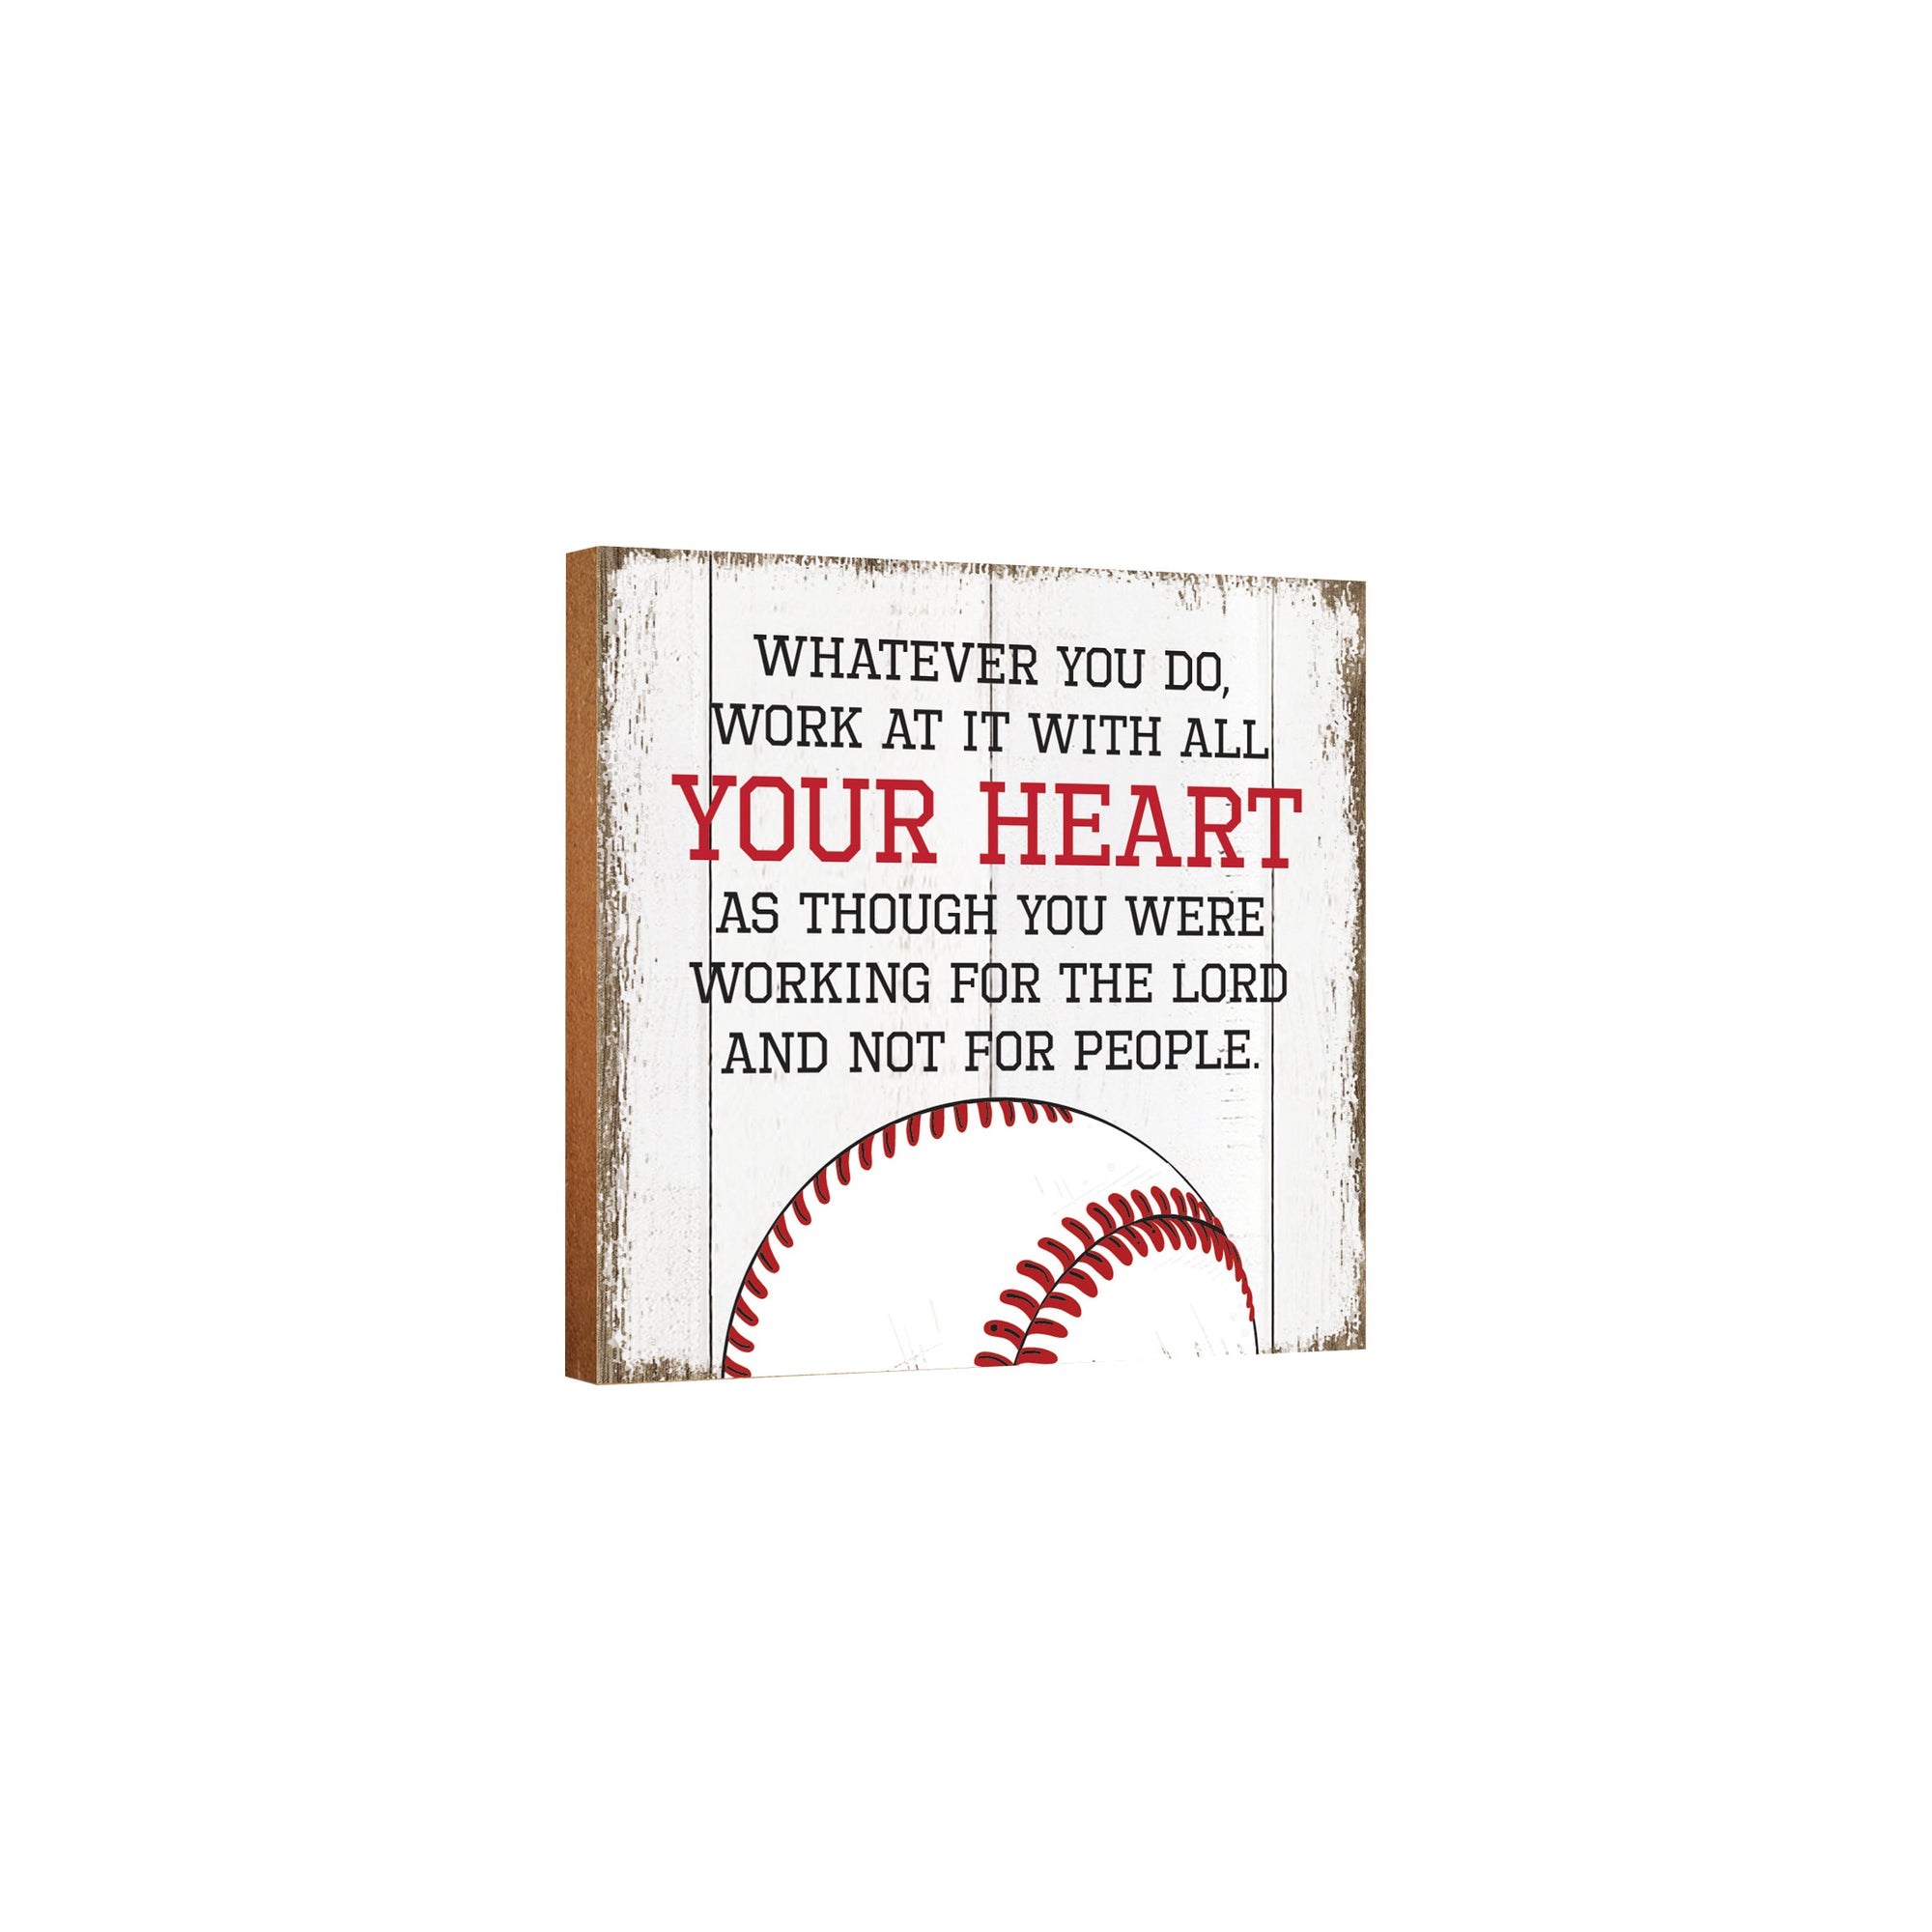 Rustic Wooden Baseball Shadow Box Shelf Décor With Inspiring Bible Verses - Whatever You Do